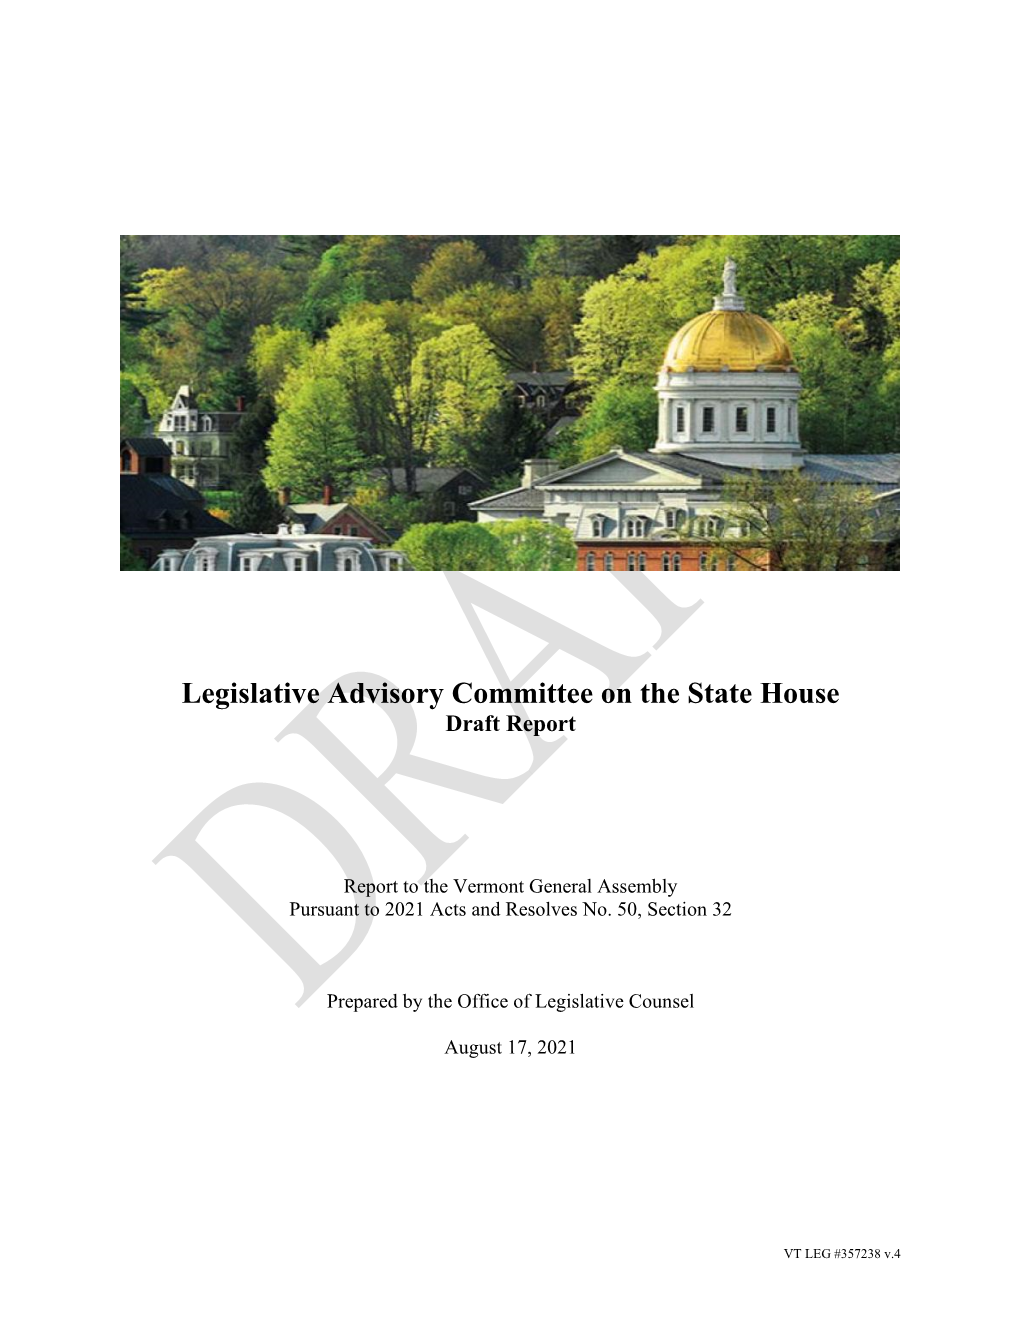 Legislative Advisory Committee on the State House Draft Report